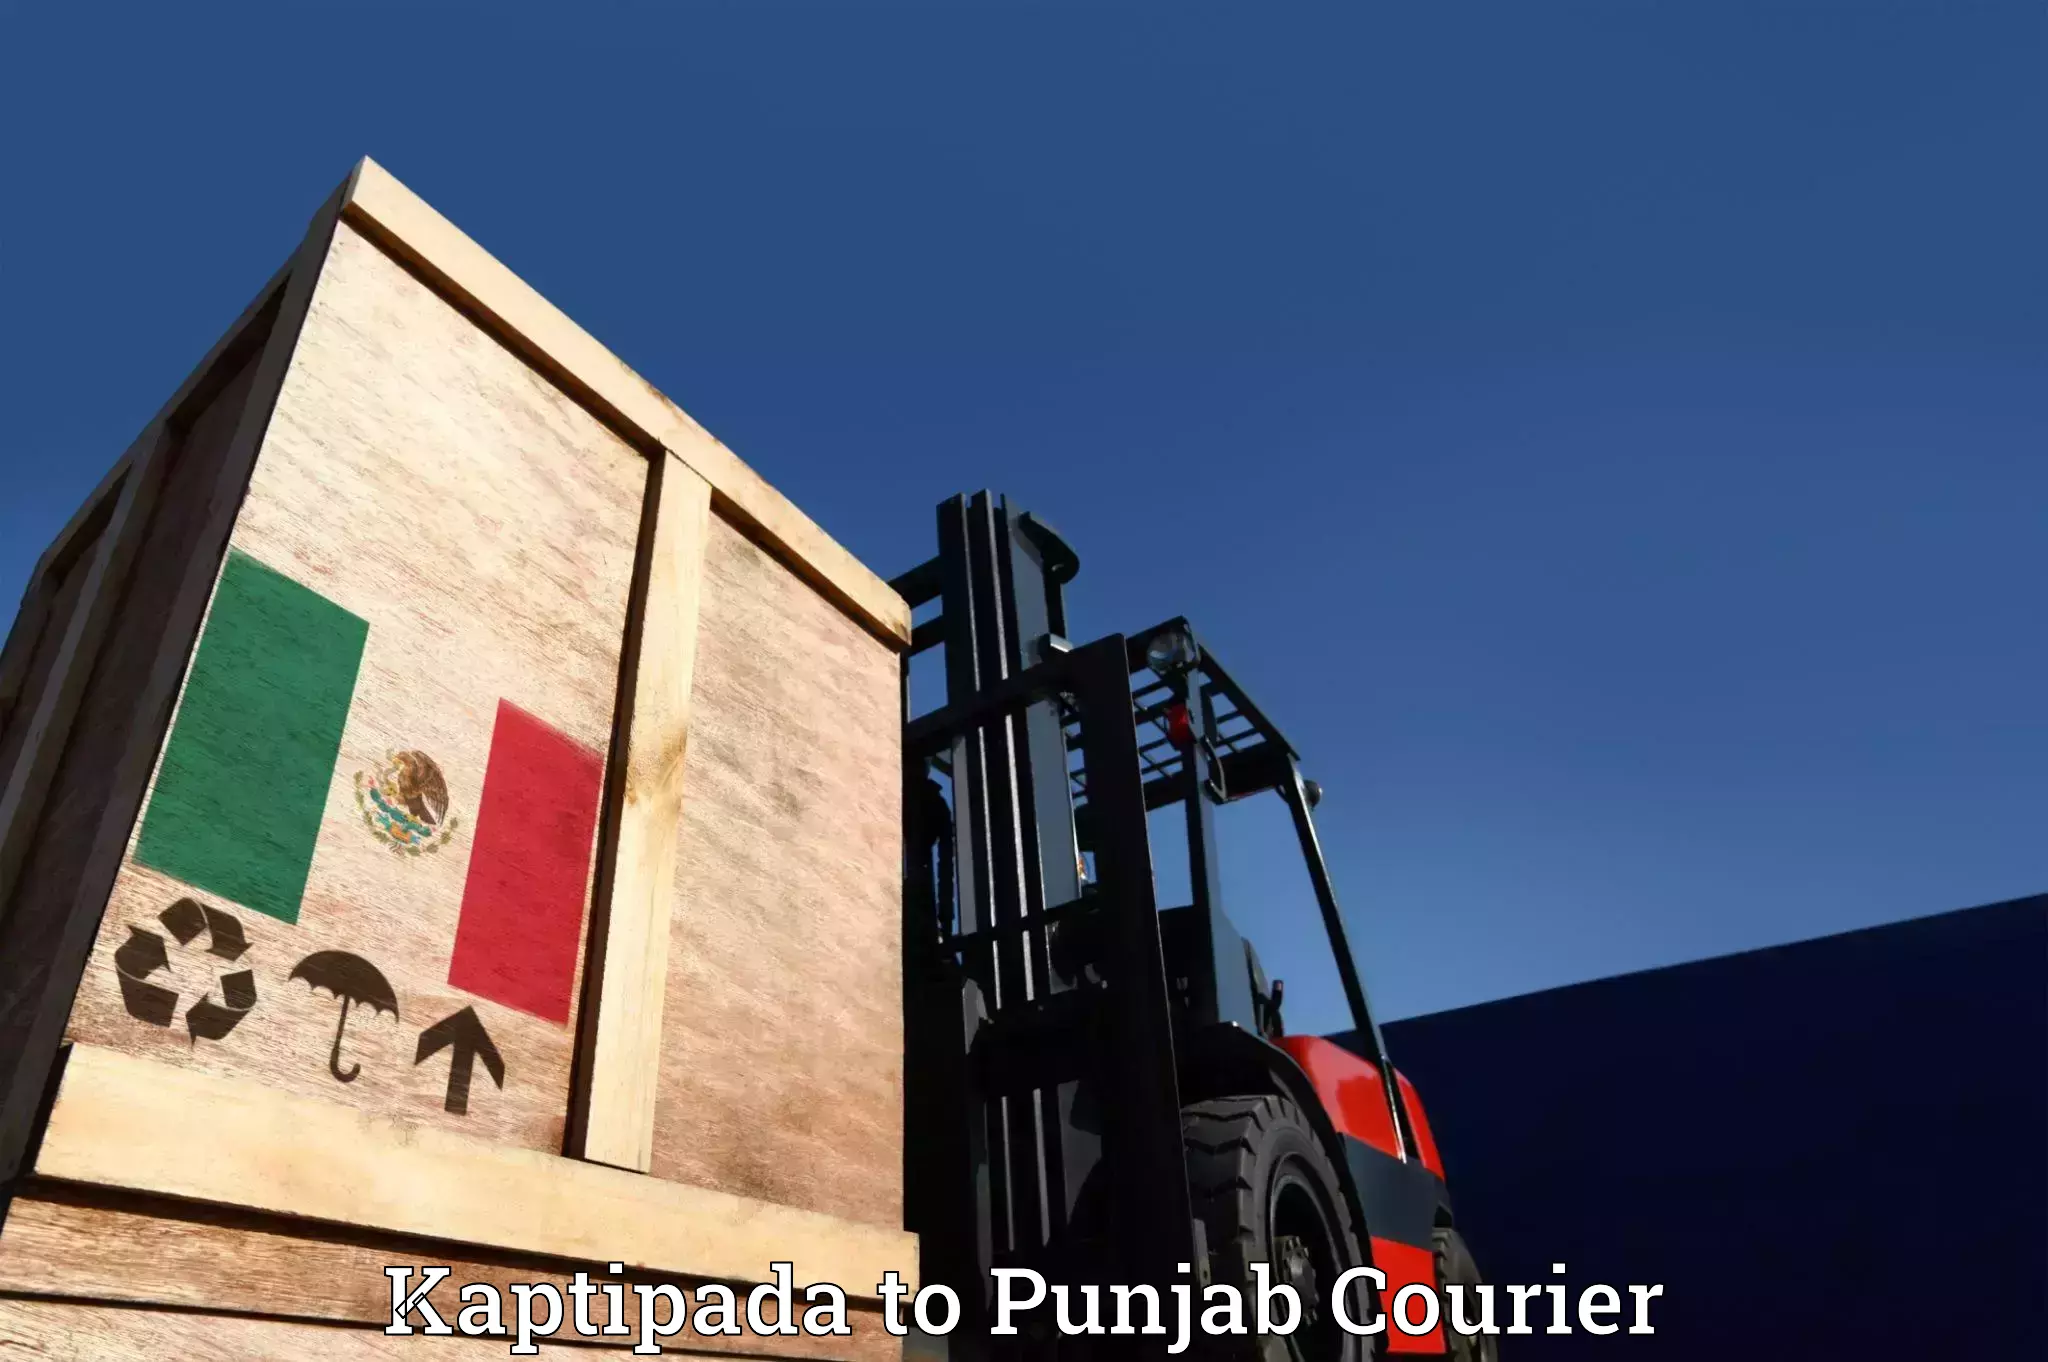 Professional moving company Kaptipada to Punjab